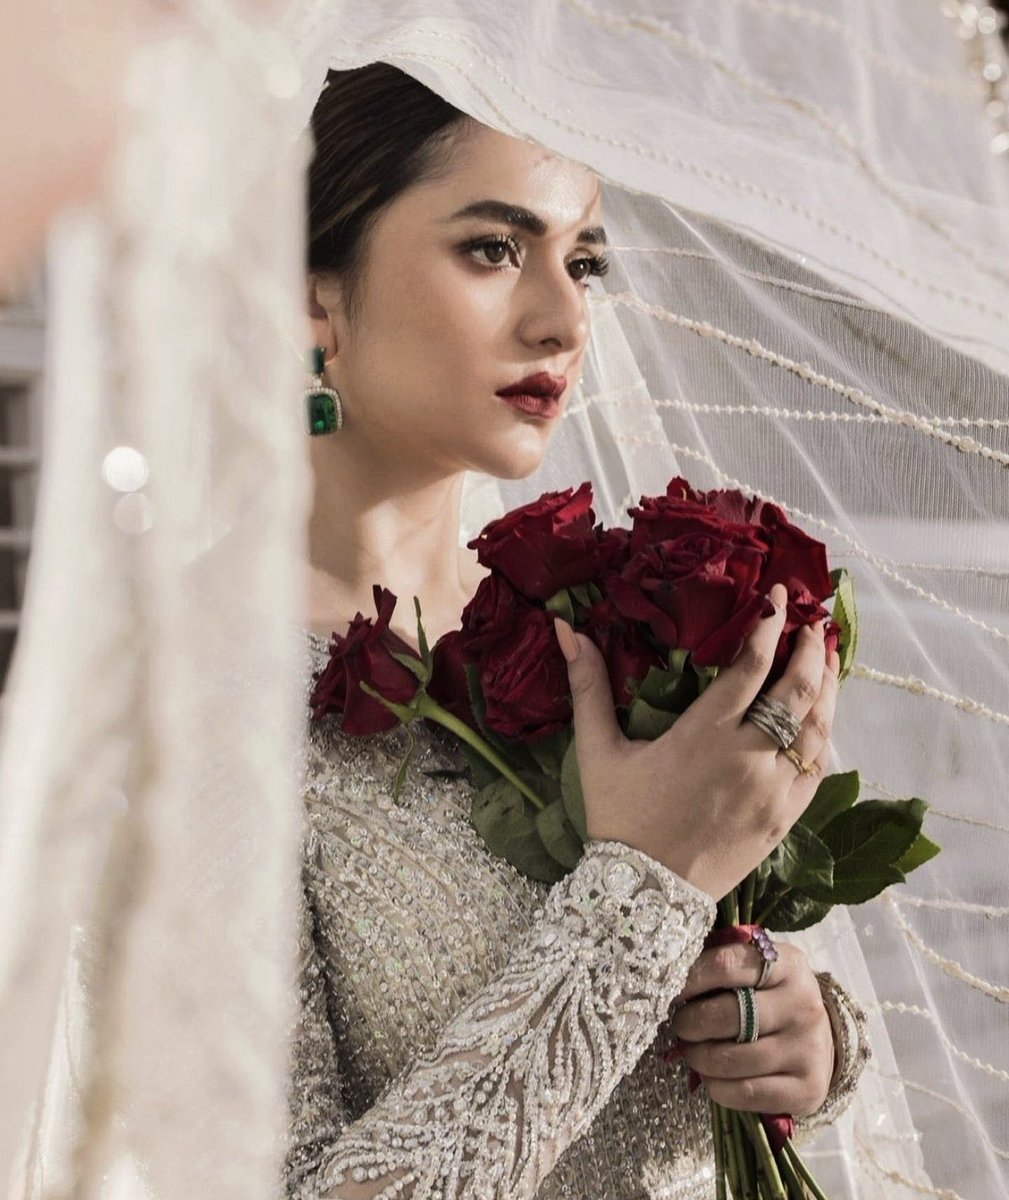 Yumna's best photoshoot would undoubtedly be ErumKhan's wedding couture 2023 💕
#YumnaZaidi